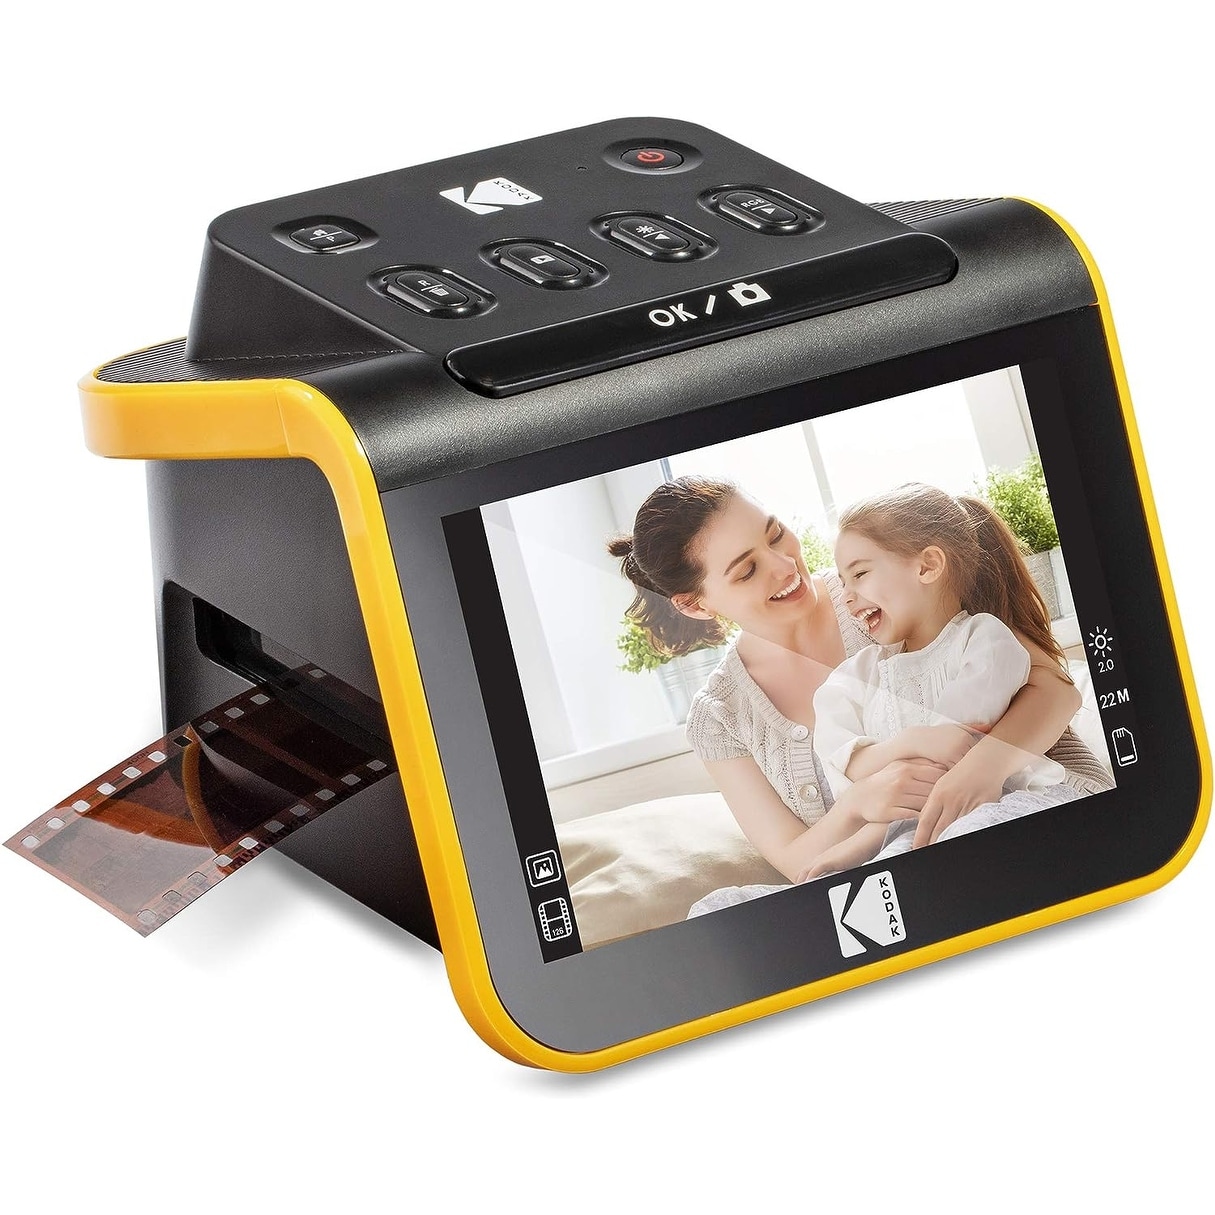 KODAK Slide N SCAN Film and Slide Scanner with Large 5” LCD Screen, Convert Color & B&W Negatives & Slides 35mm, 126, 110 Film N